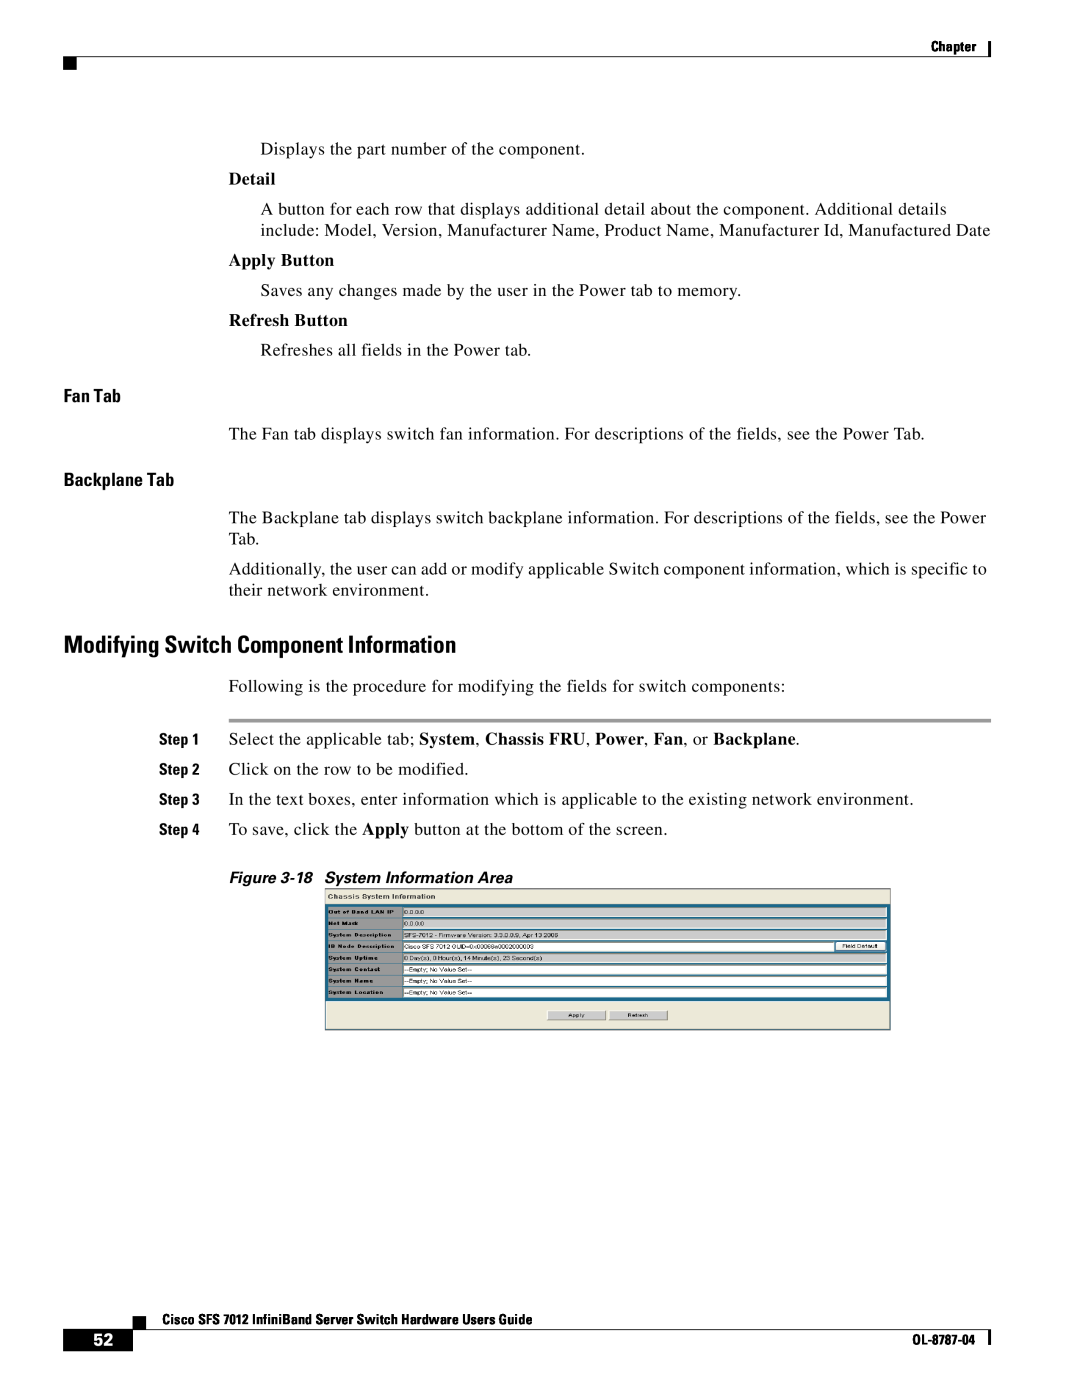 Cisco Systems SFS 7012 manual Modifying Switch Component Information, Fan Tab, Backplane Tab 